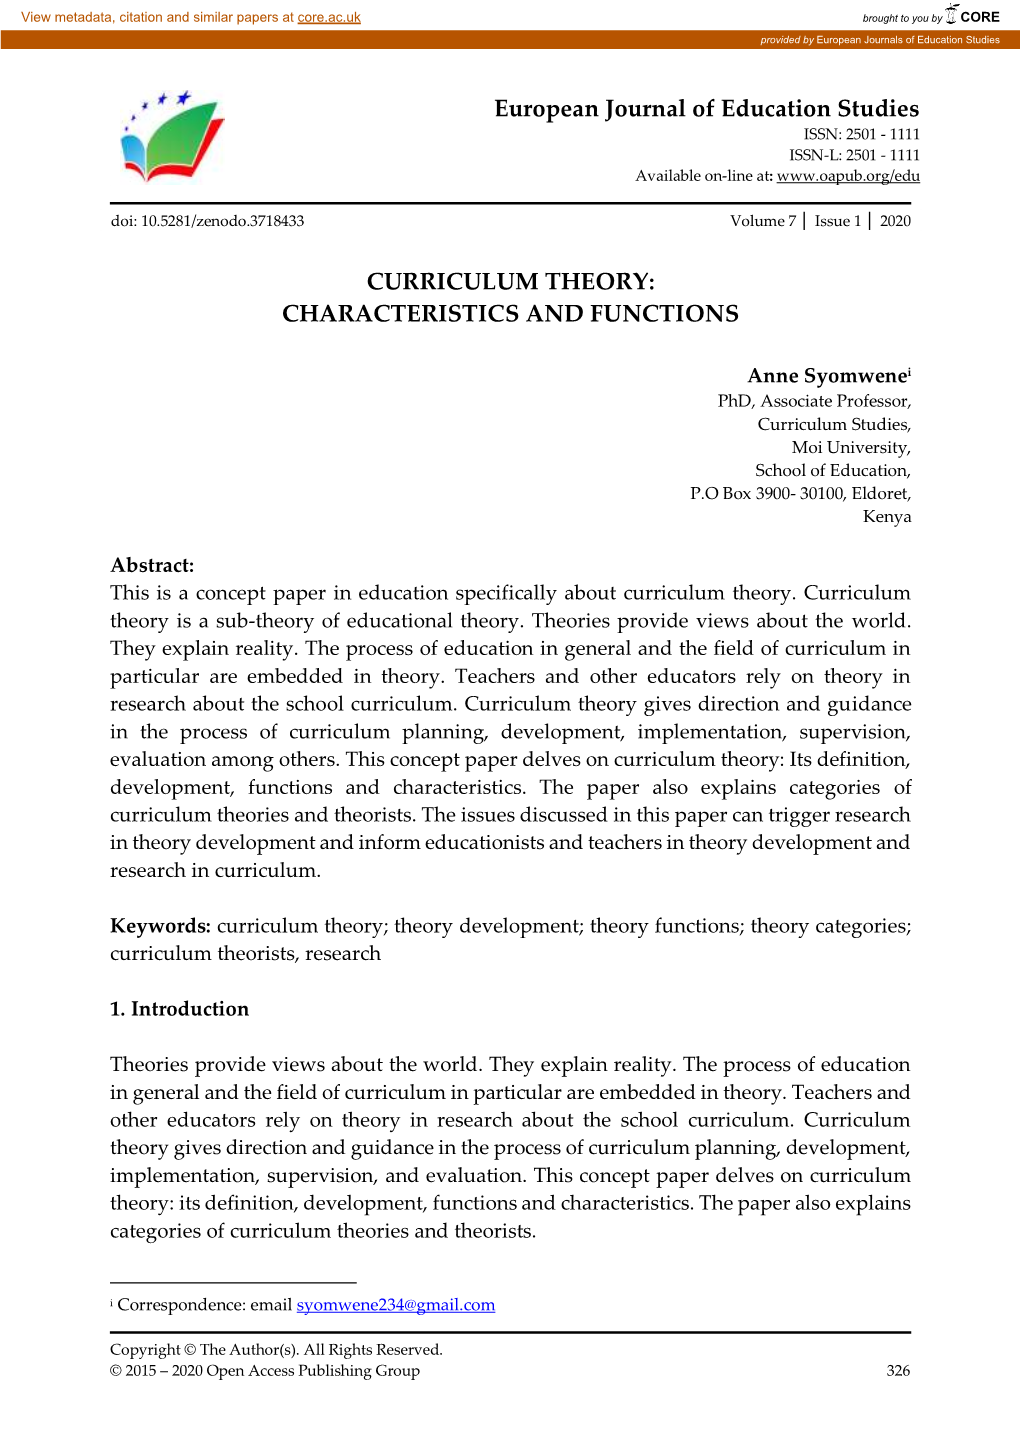 European Journal of Education Studies CURRICULUM THEORY